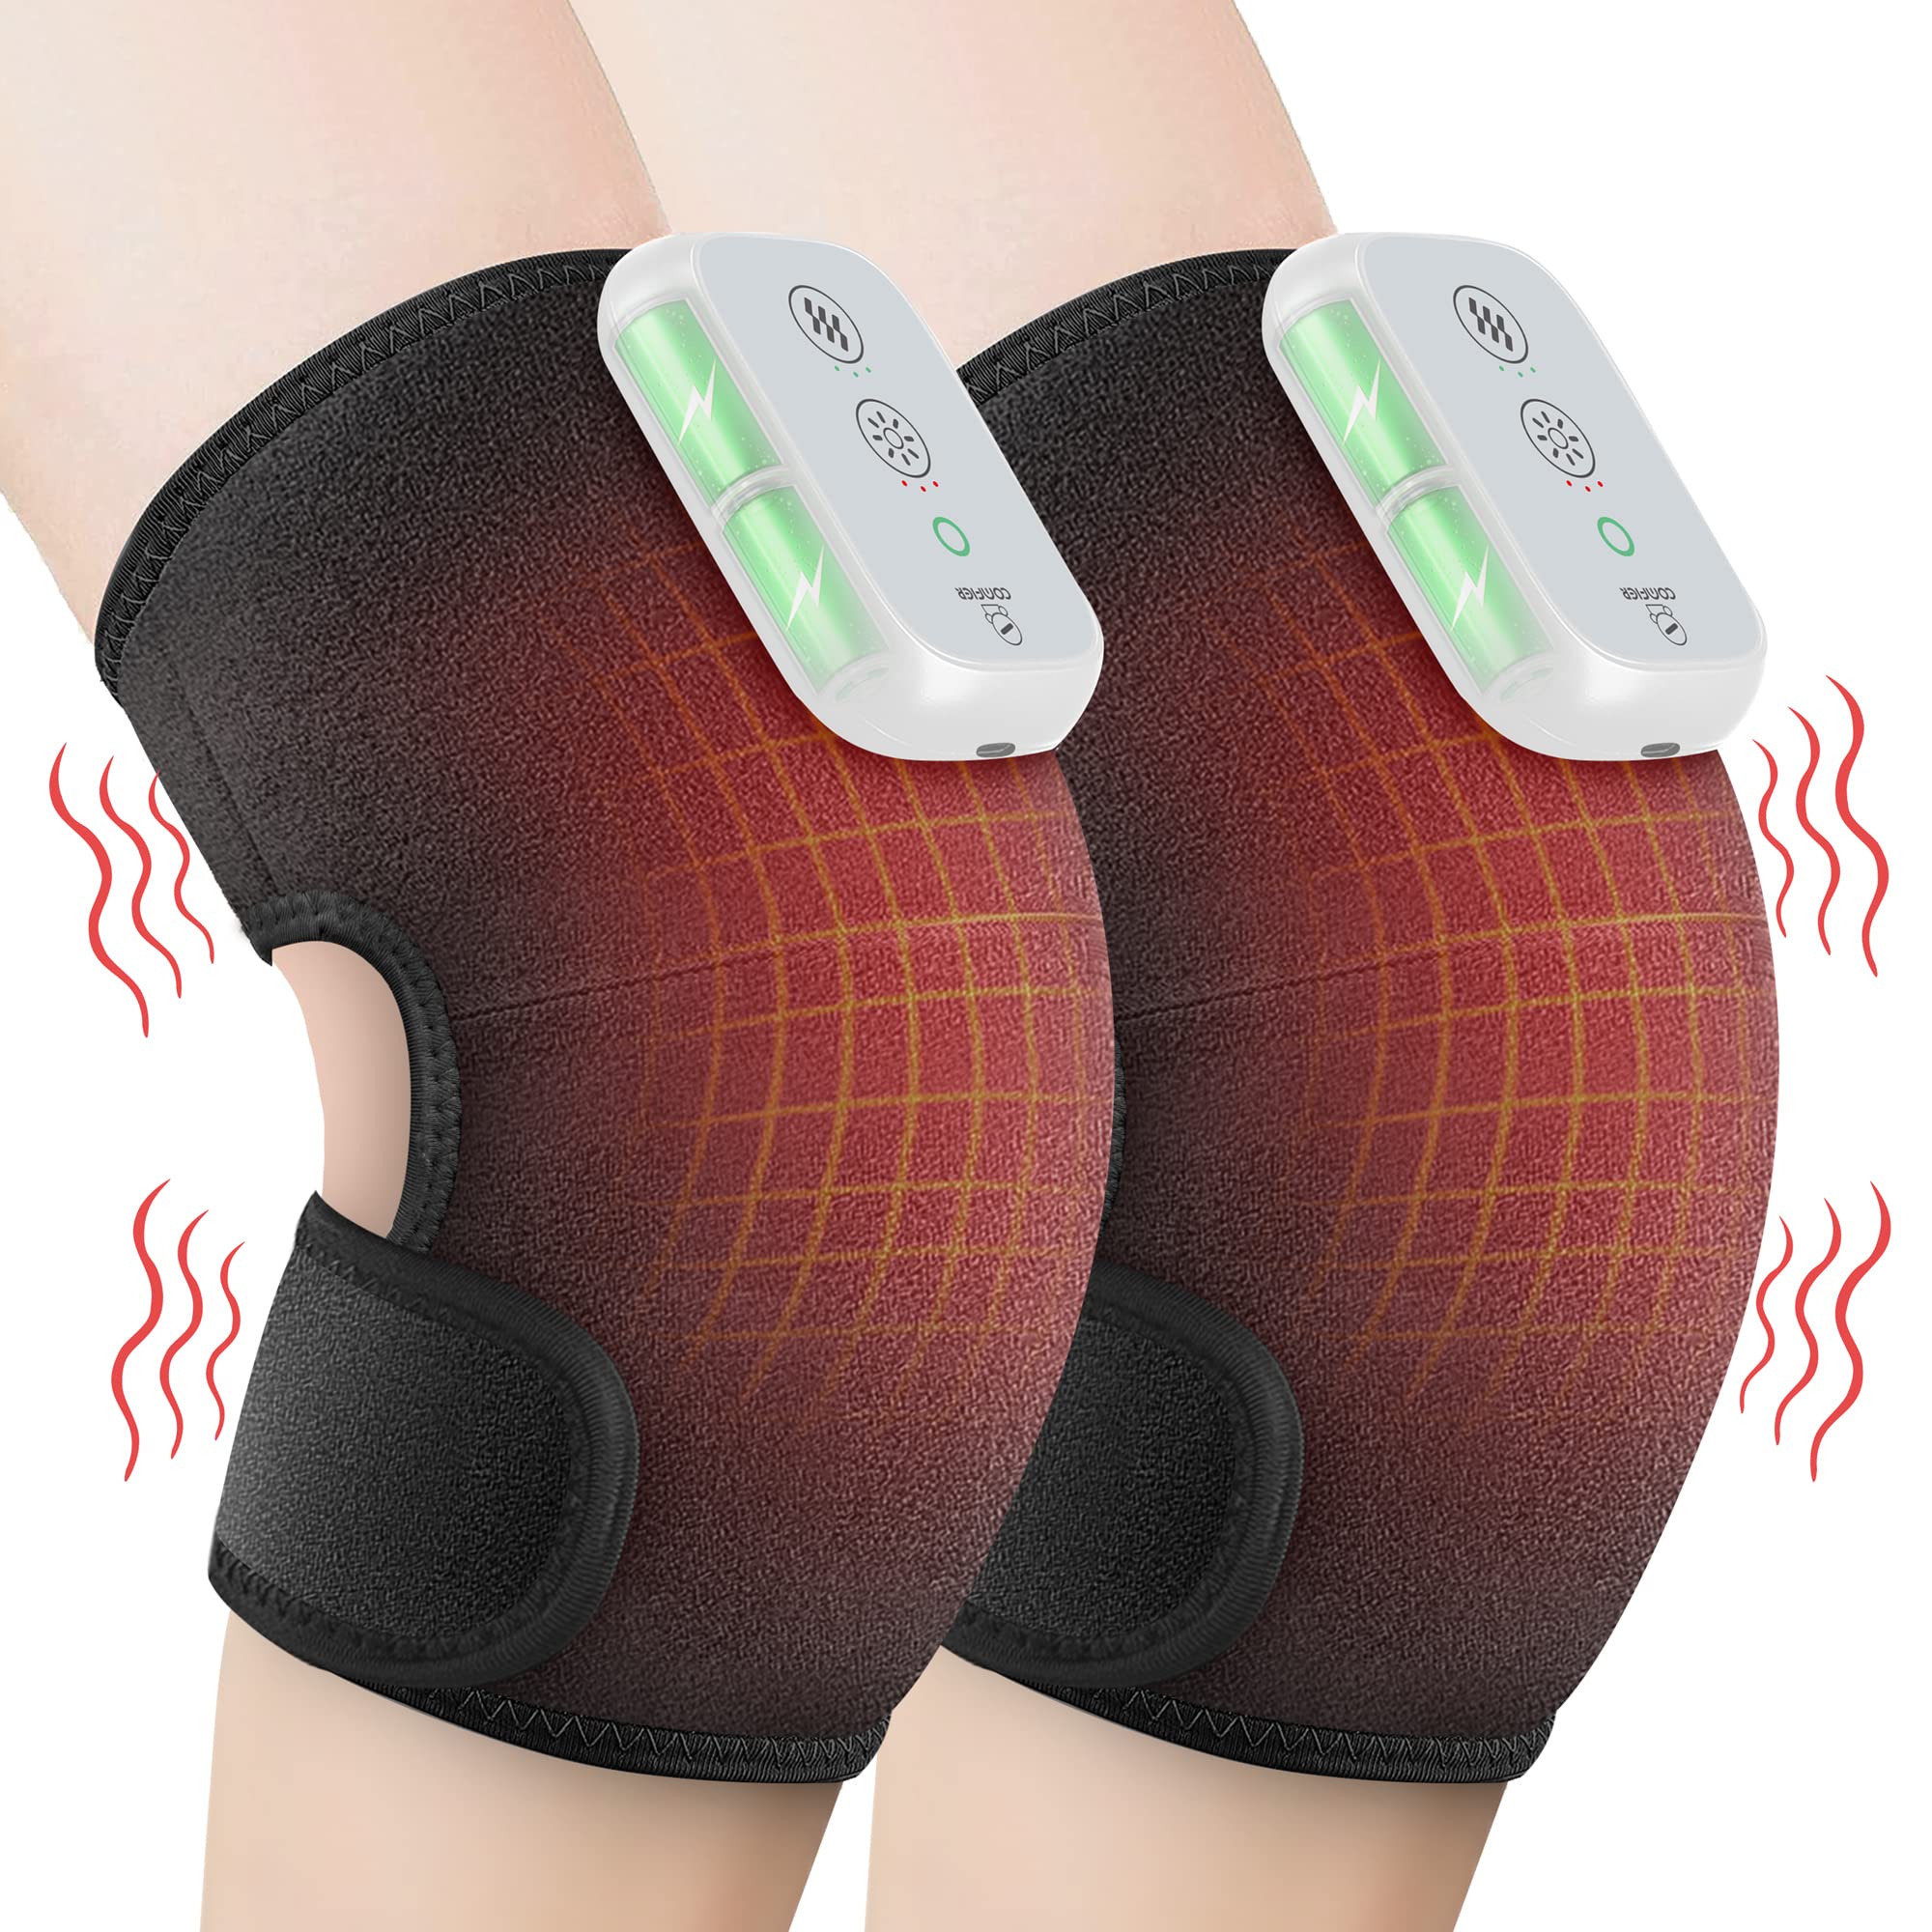 Heated Vibration Knee Massager, Heated Knee Brace Wrap with